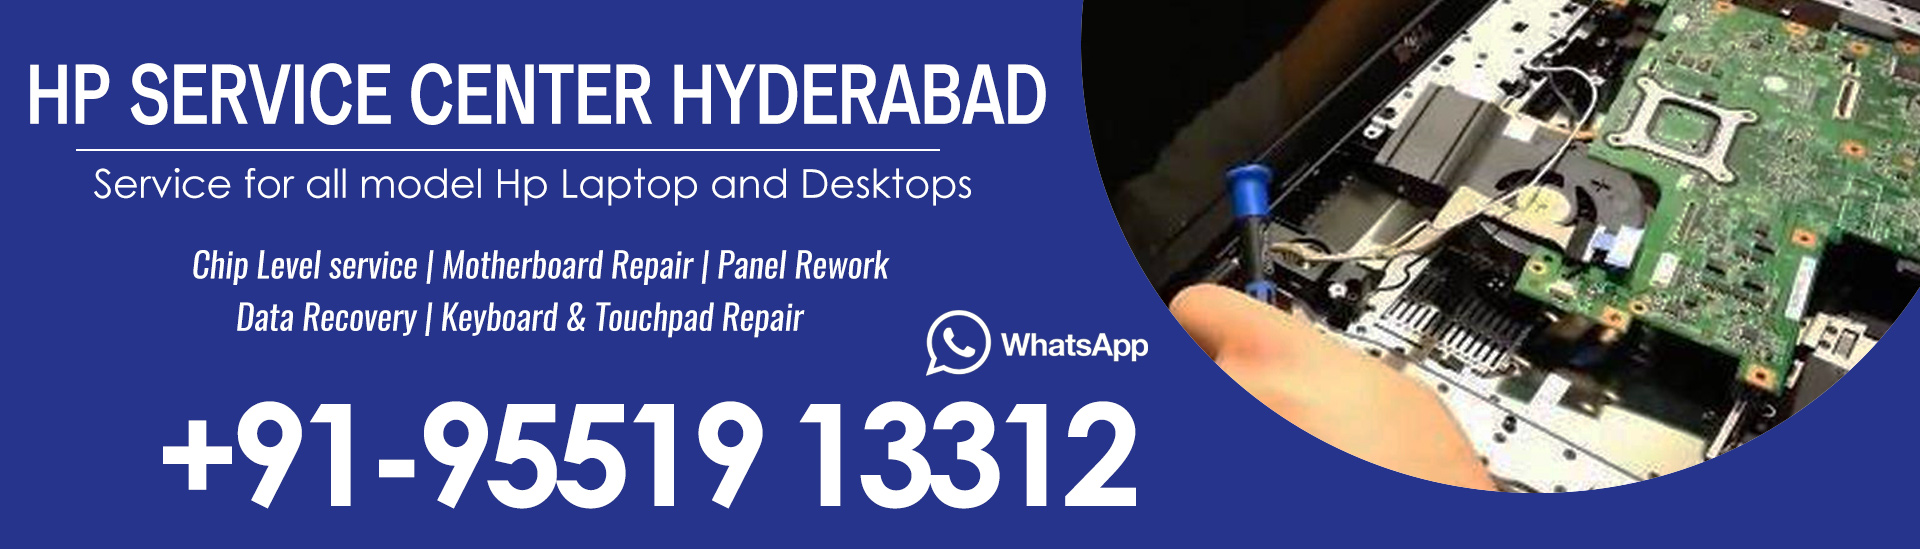 Hp Service Center Hyderabad, Hp Laptop Service Center Hyderabad